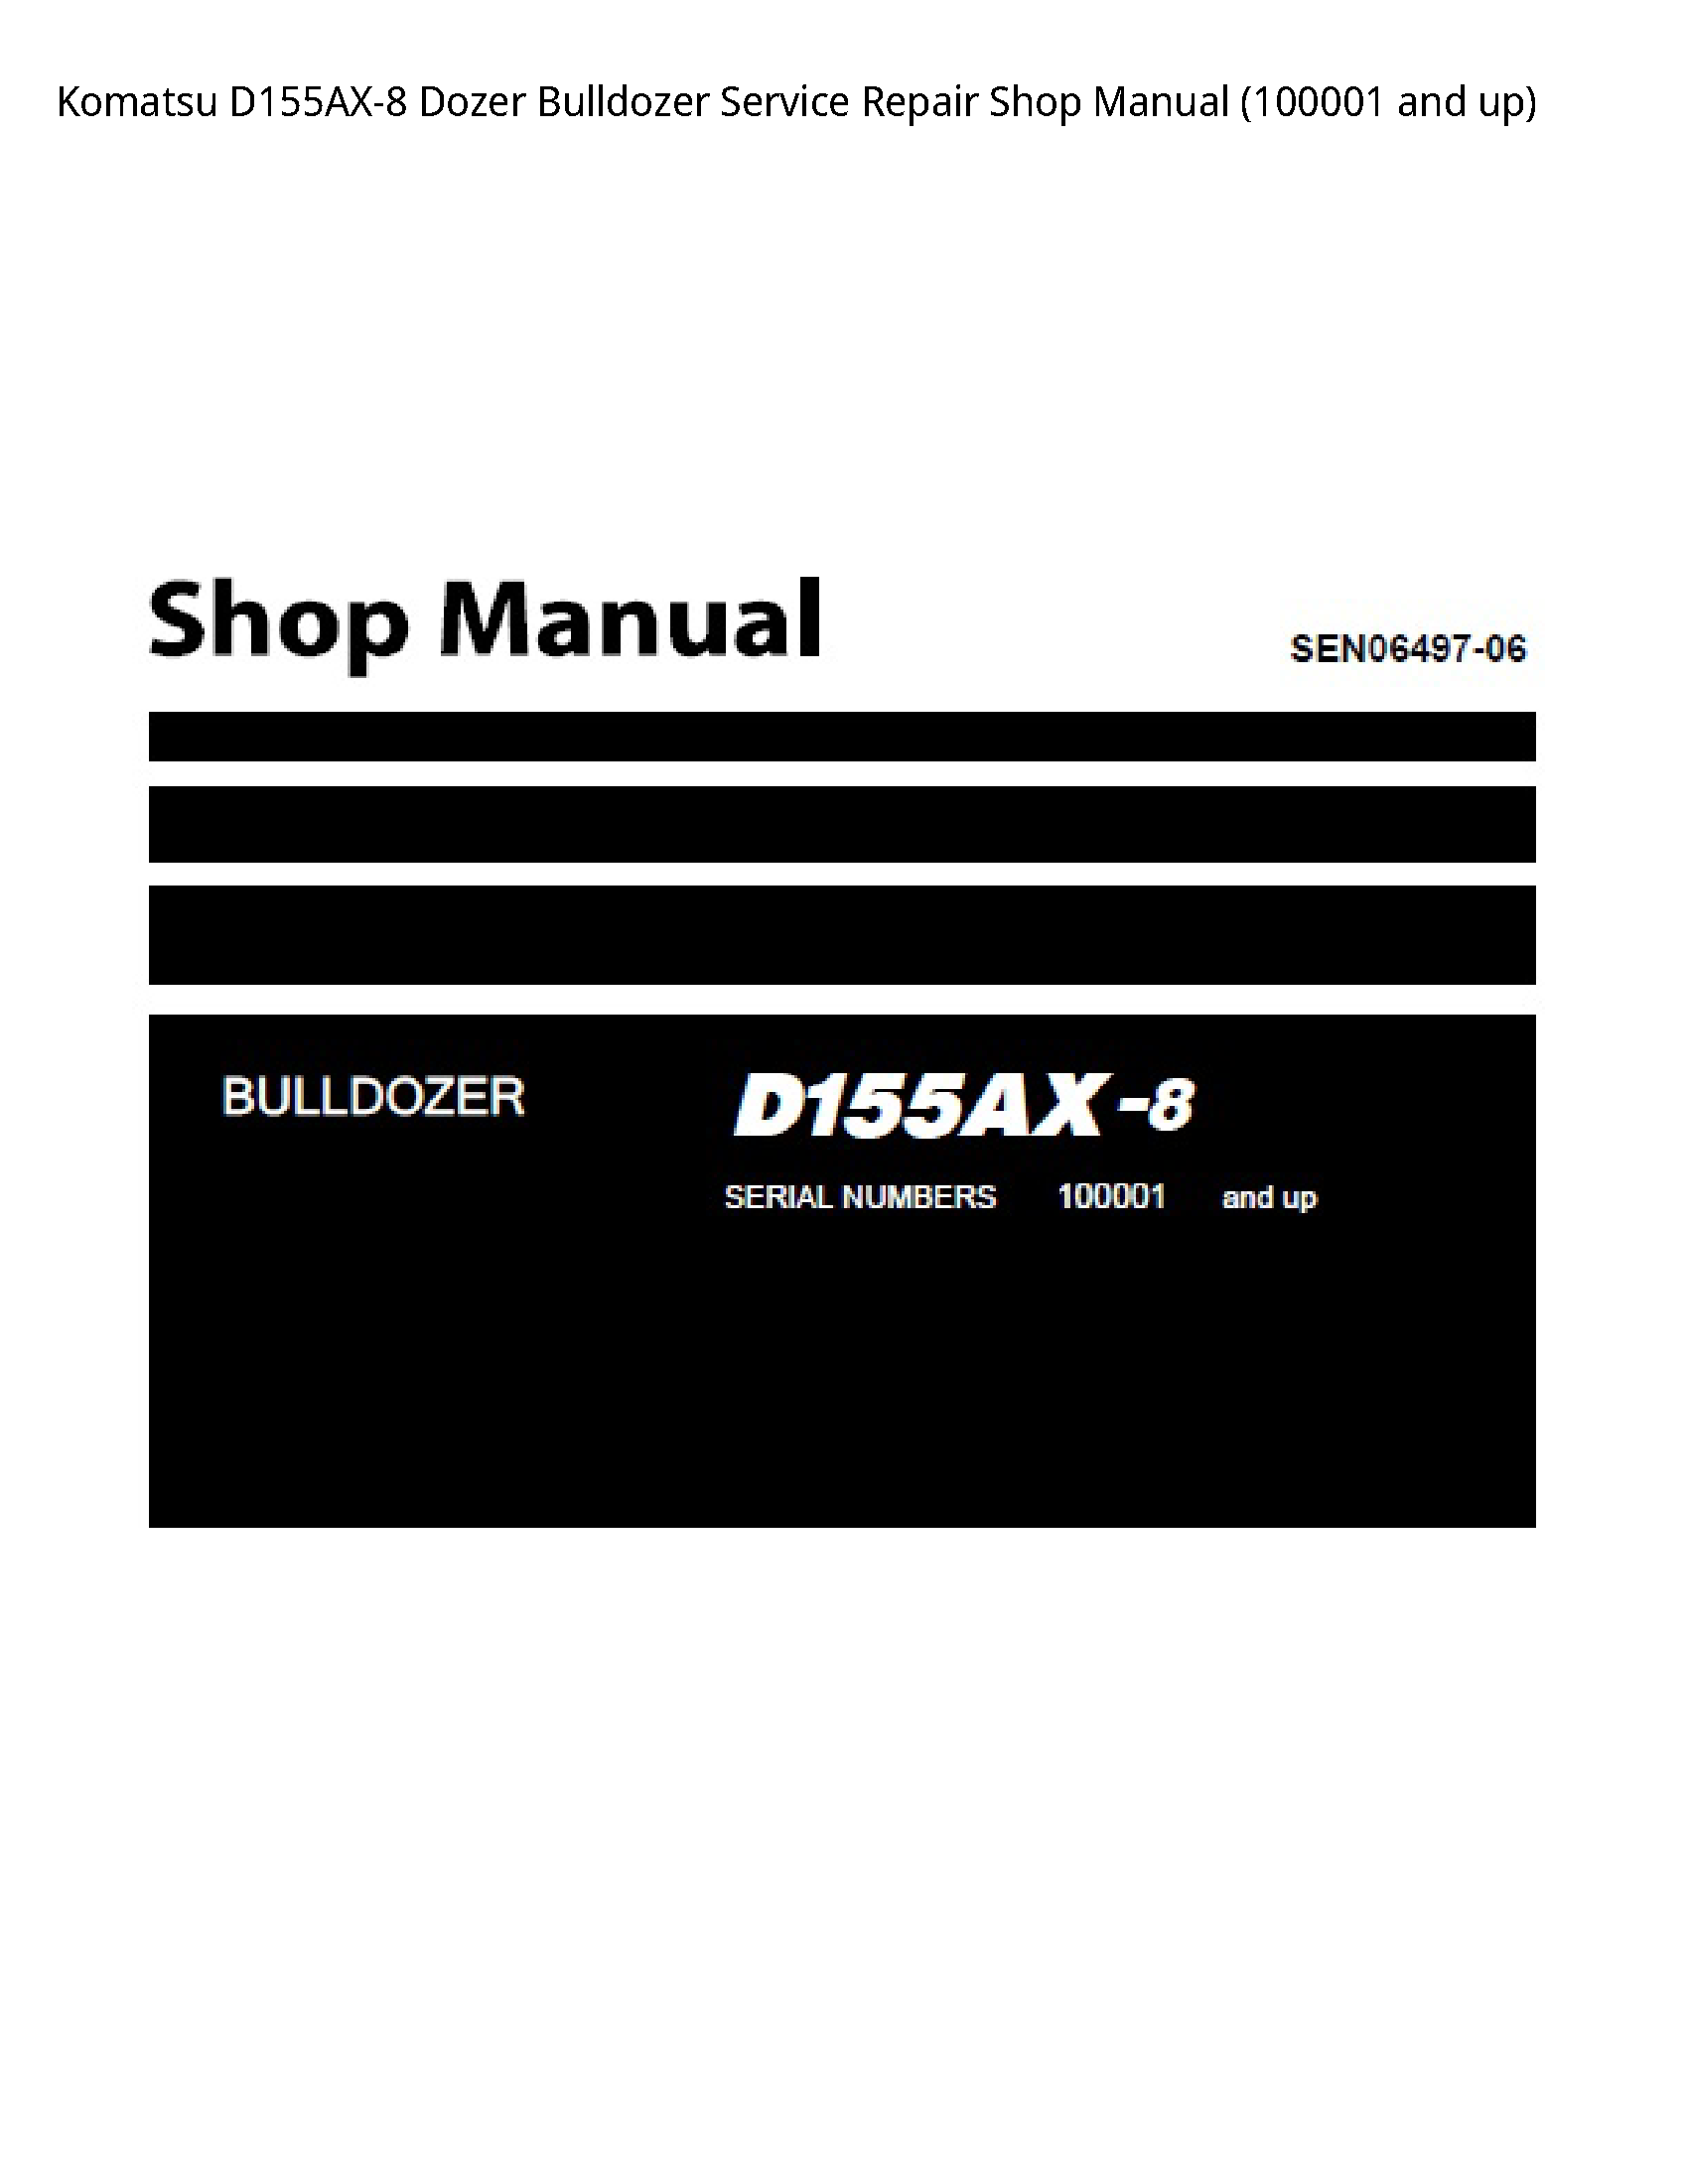 KOMATSU D155AX-8 Dozer Bulldozer manual